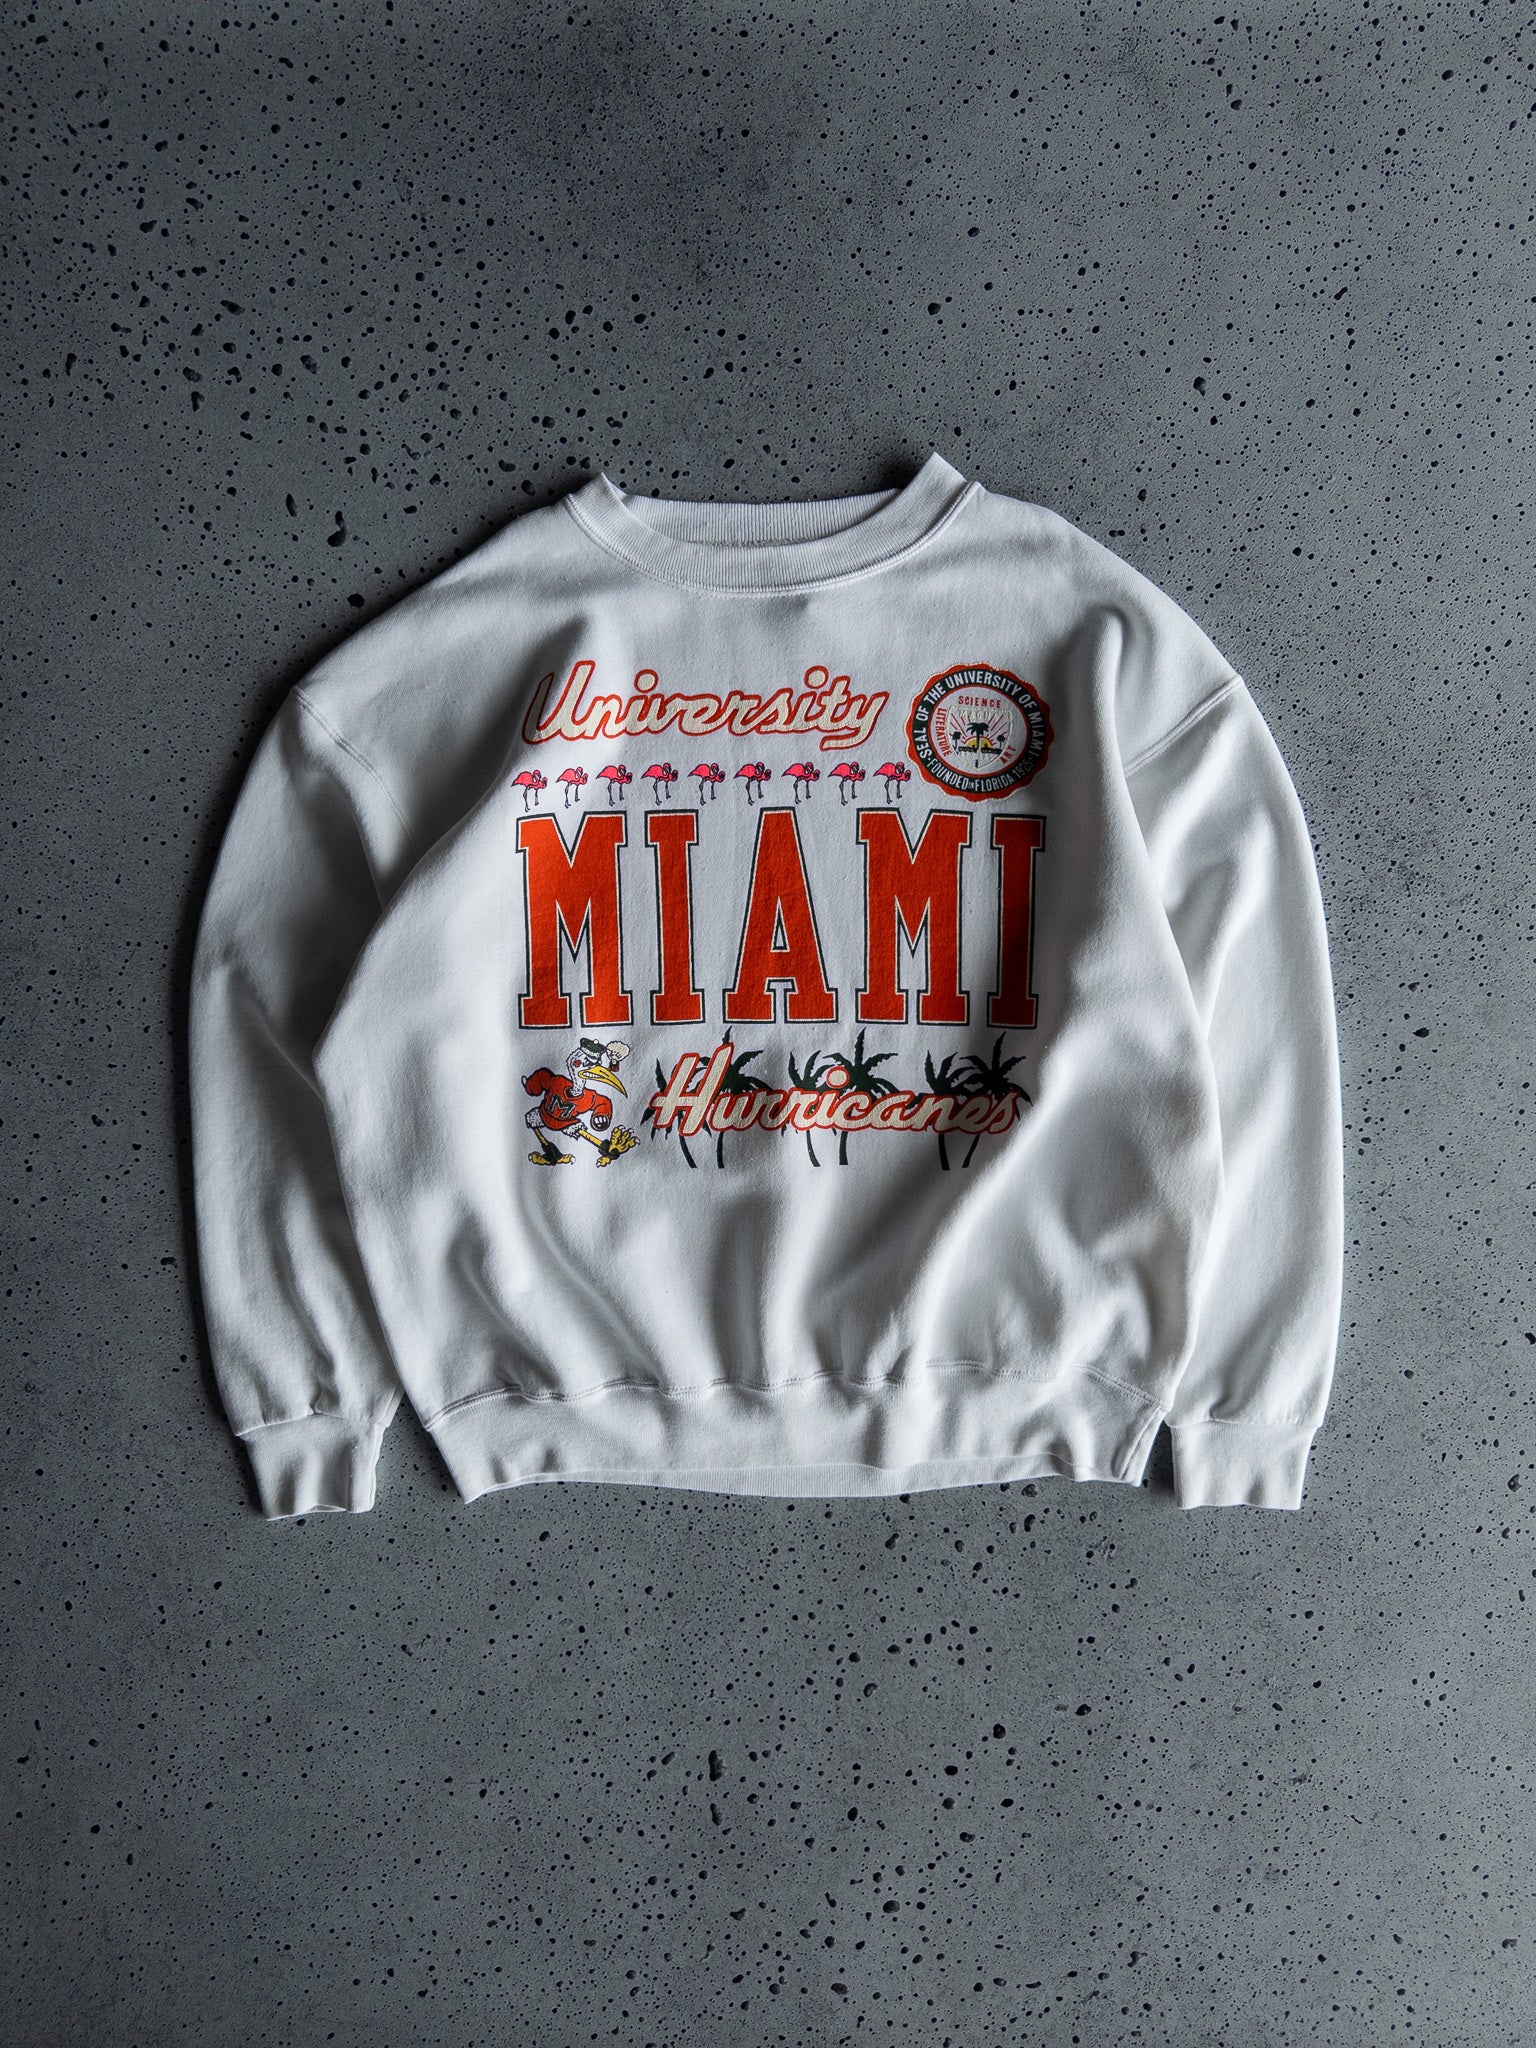 Vintage Miami Hurricanes Sweatshirt (XL)